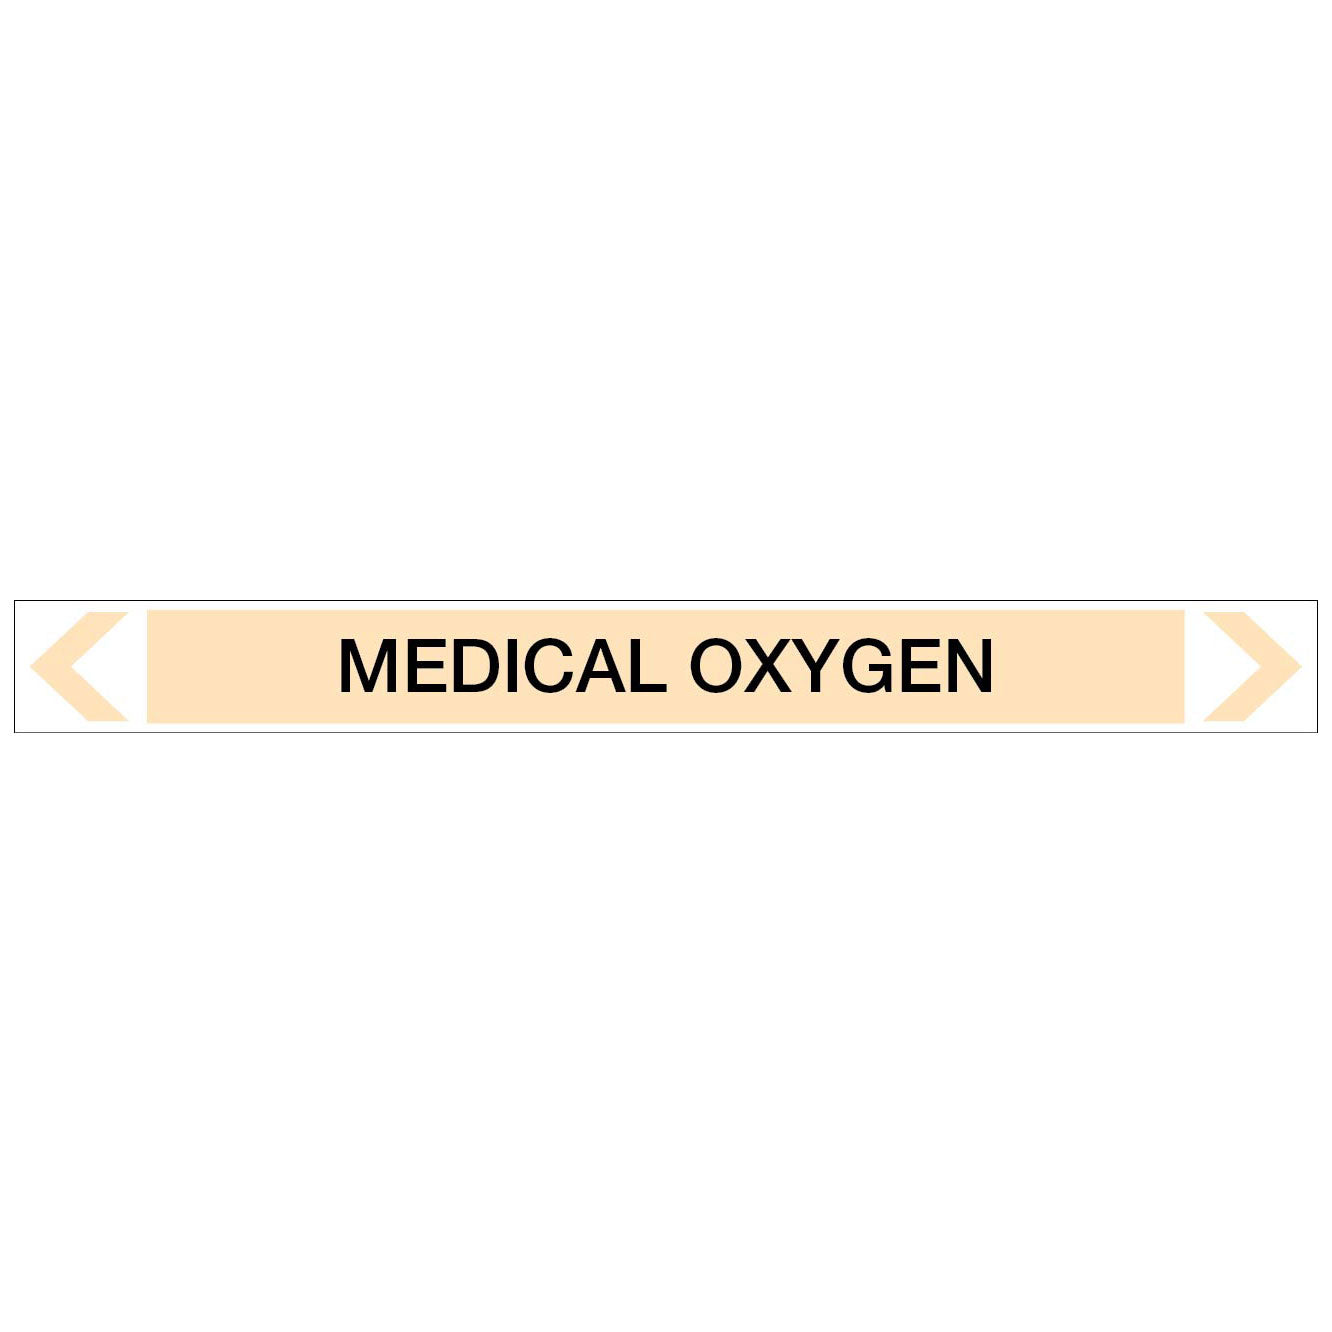 Gases - Medical Oxygen - Pipe Marker Sticker